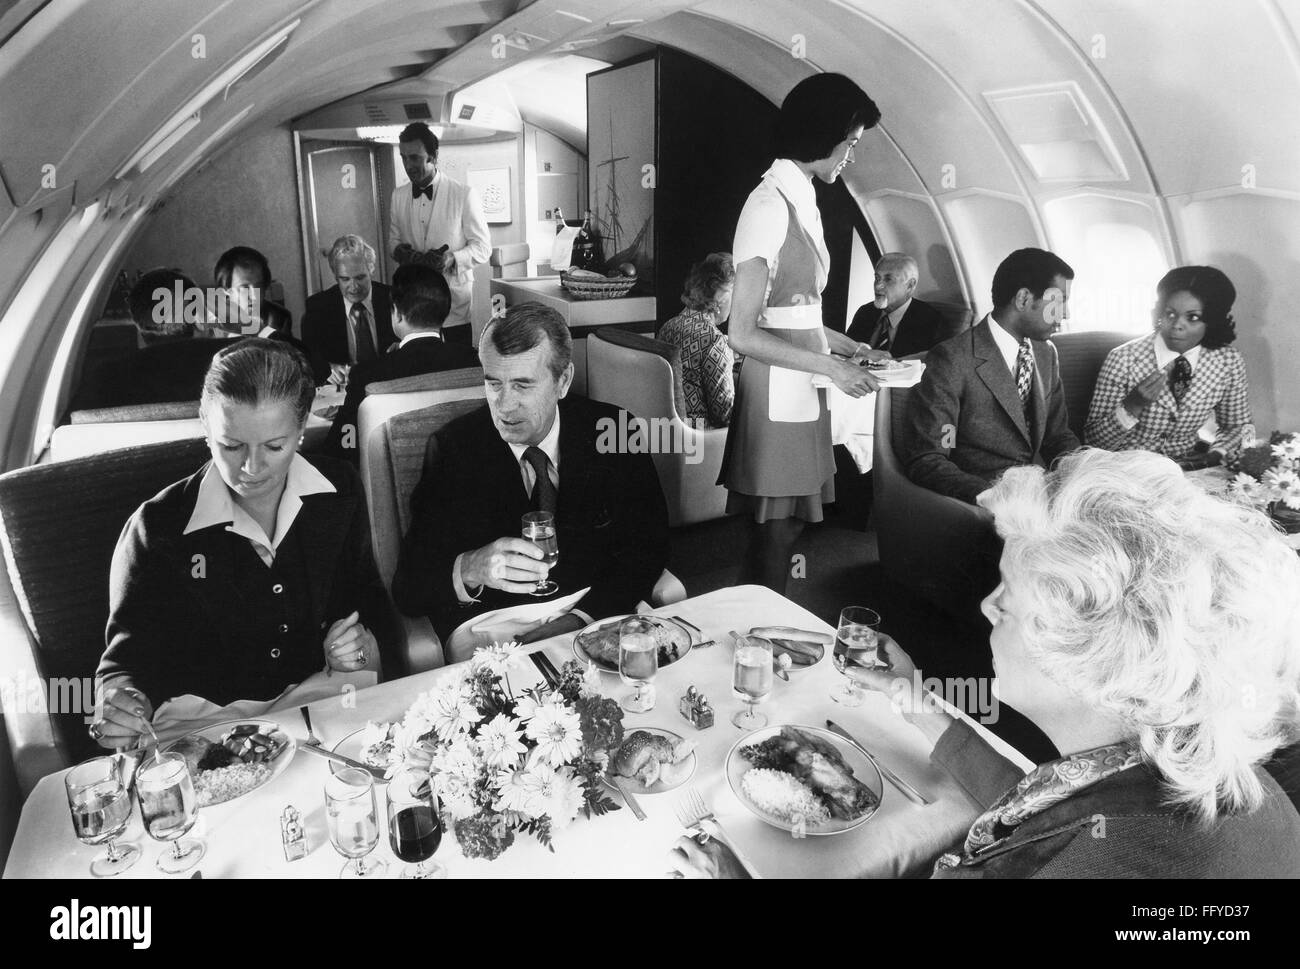 Самолет пожилые люди. Самолет Пан Американ салон самолета. Обед на борту ту 114 1960. Салоны самолетов в 70е. Салон самолета ретро.